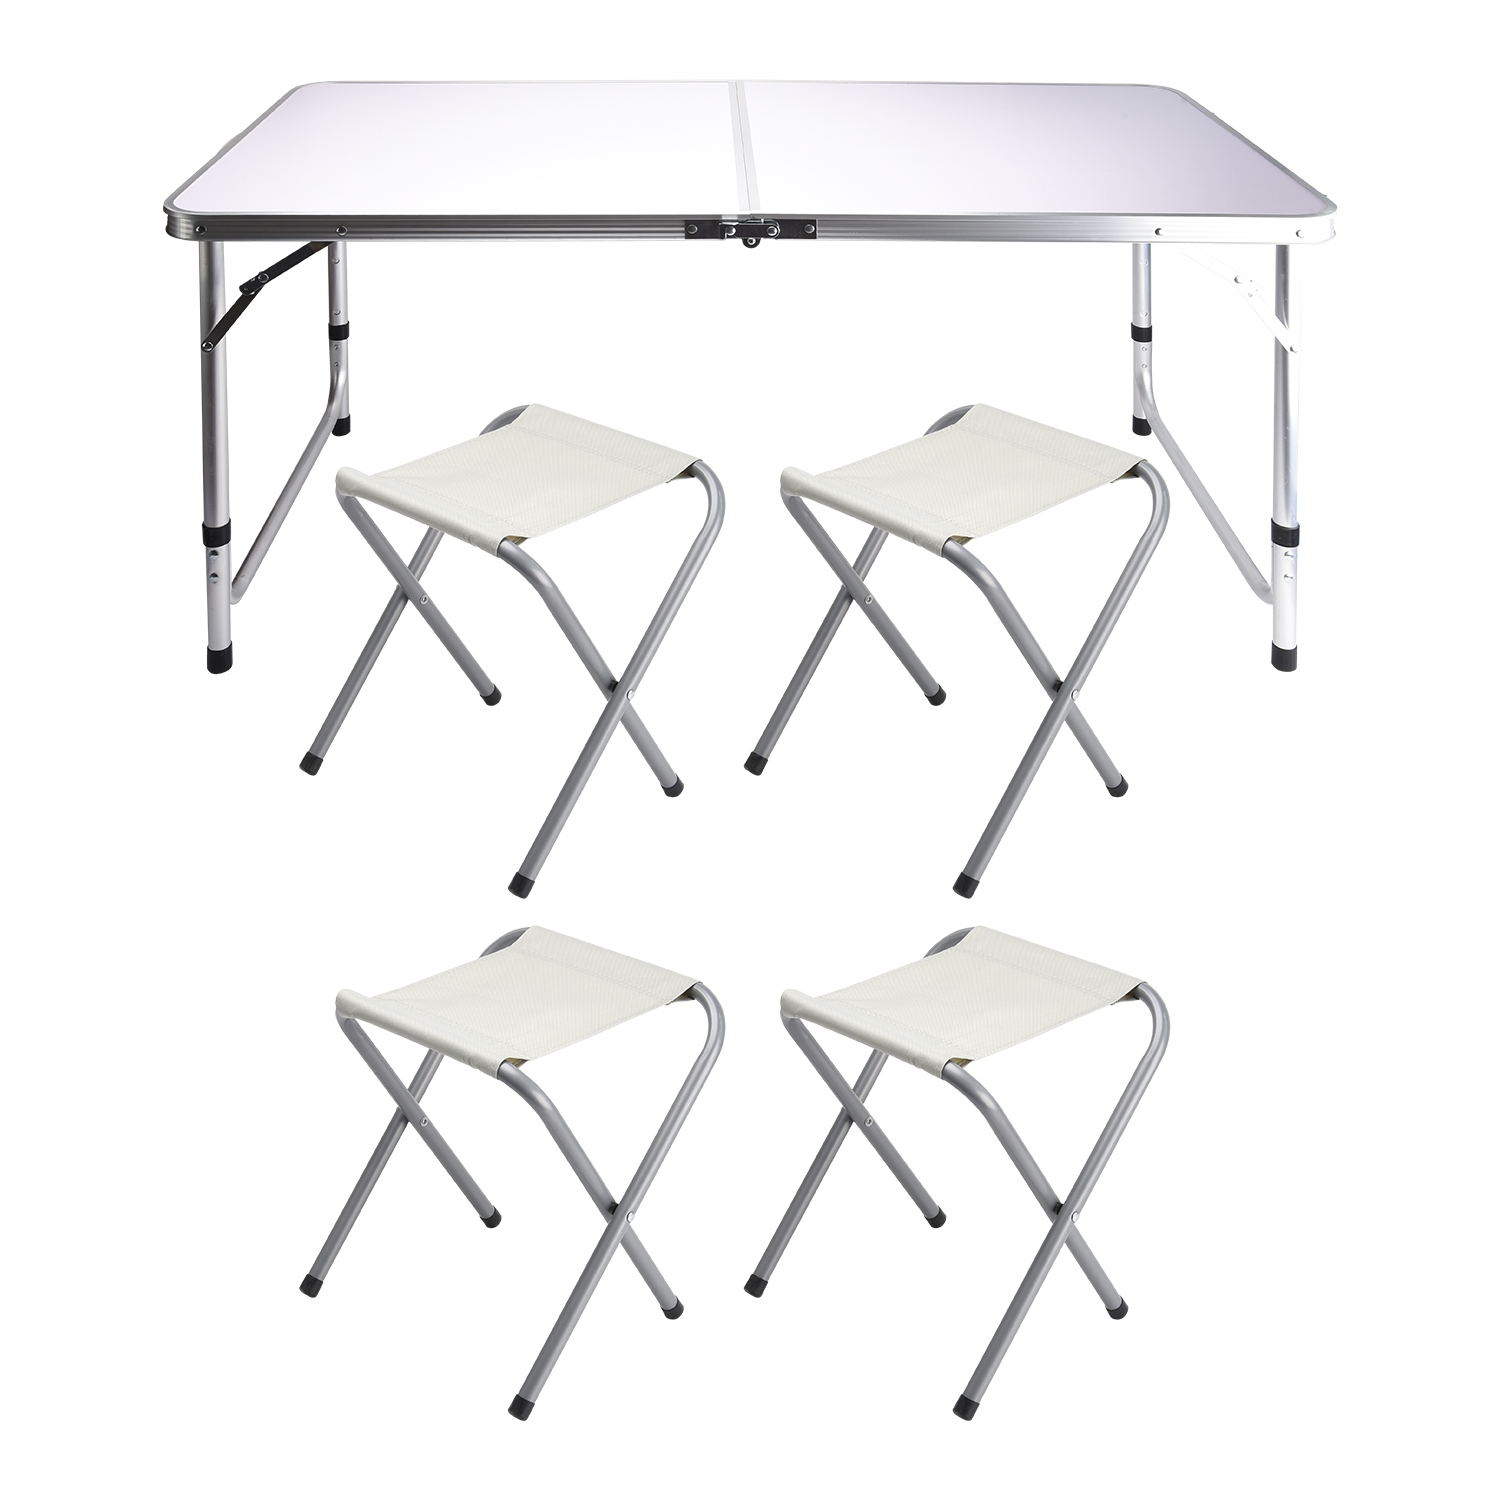 Туристический стол со стульями ProfiCamp Basic стол 120х60х70 см, 4 стула 32х27х35 см